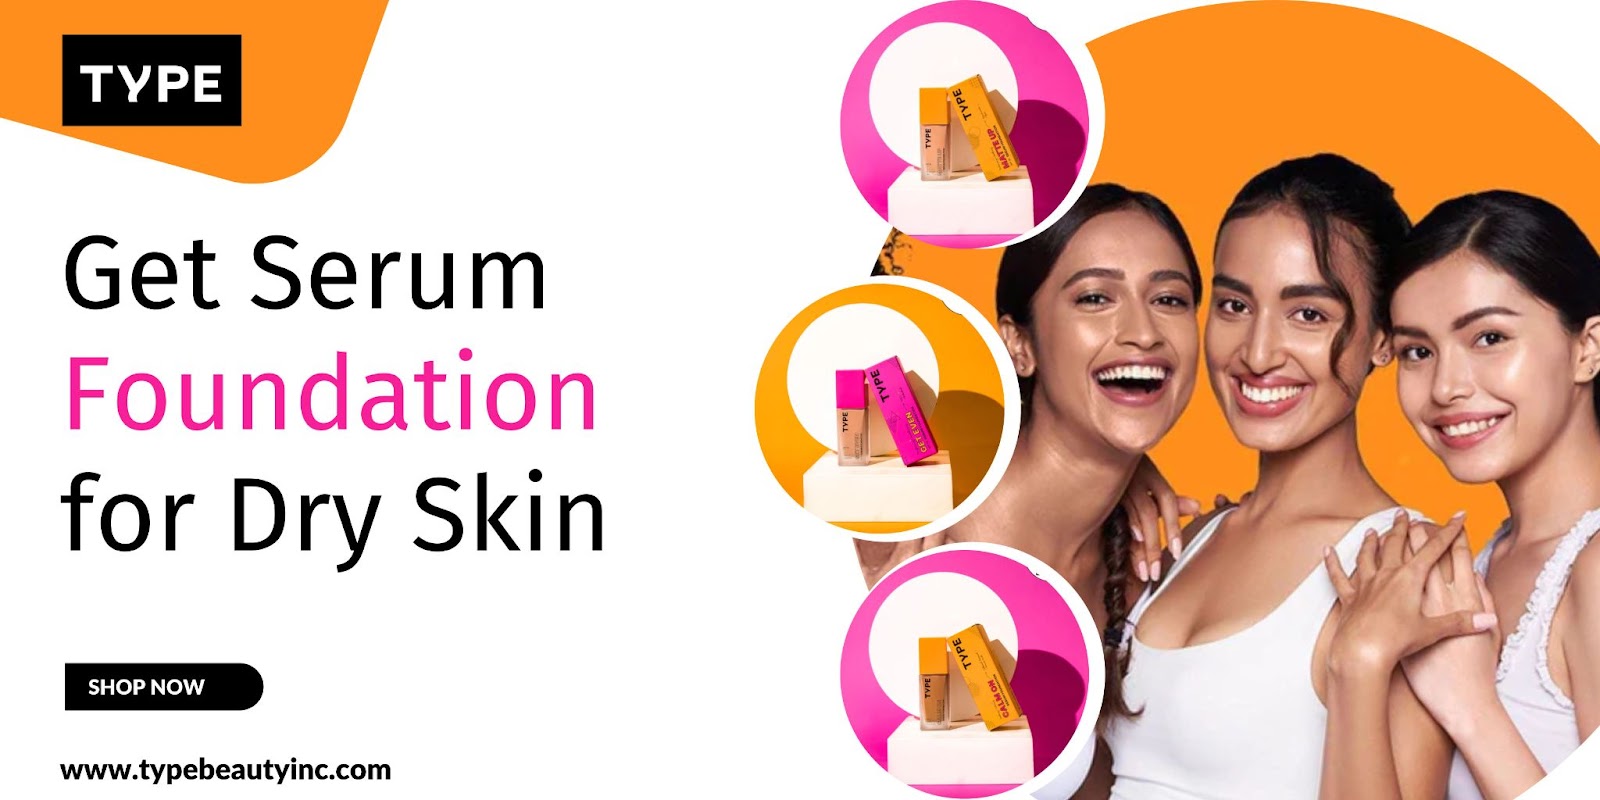 Get Serum Foundation for Dry Skin